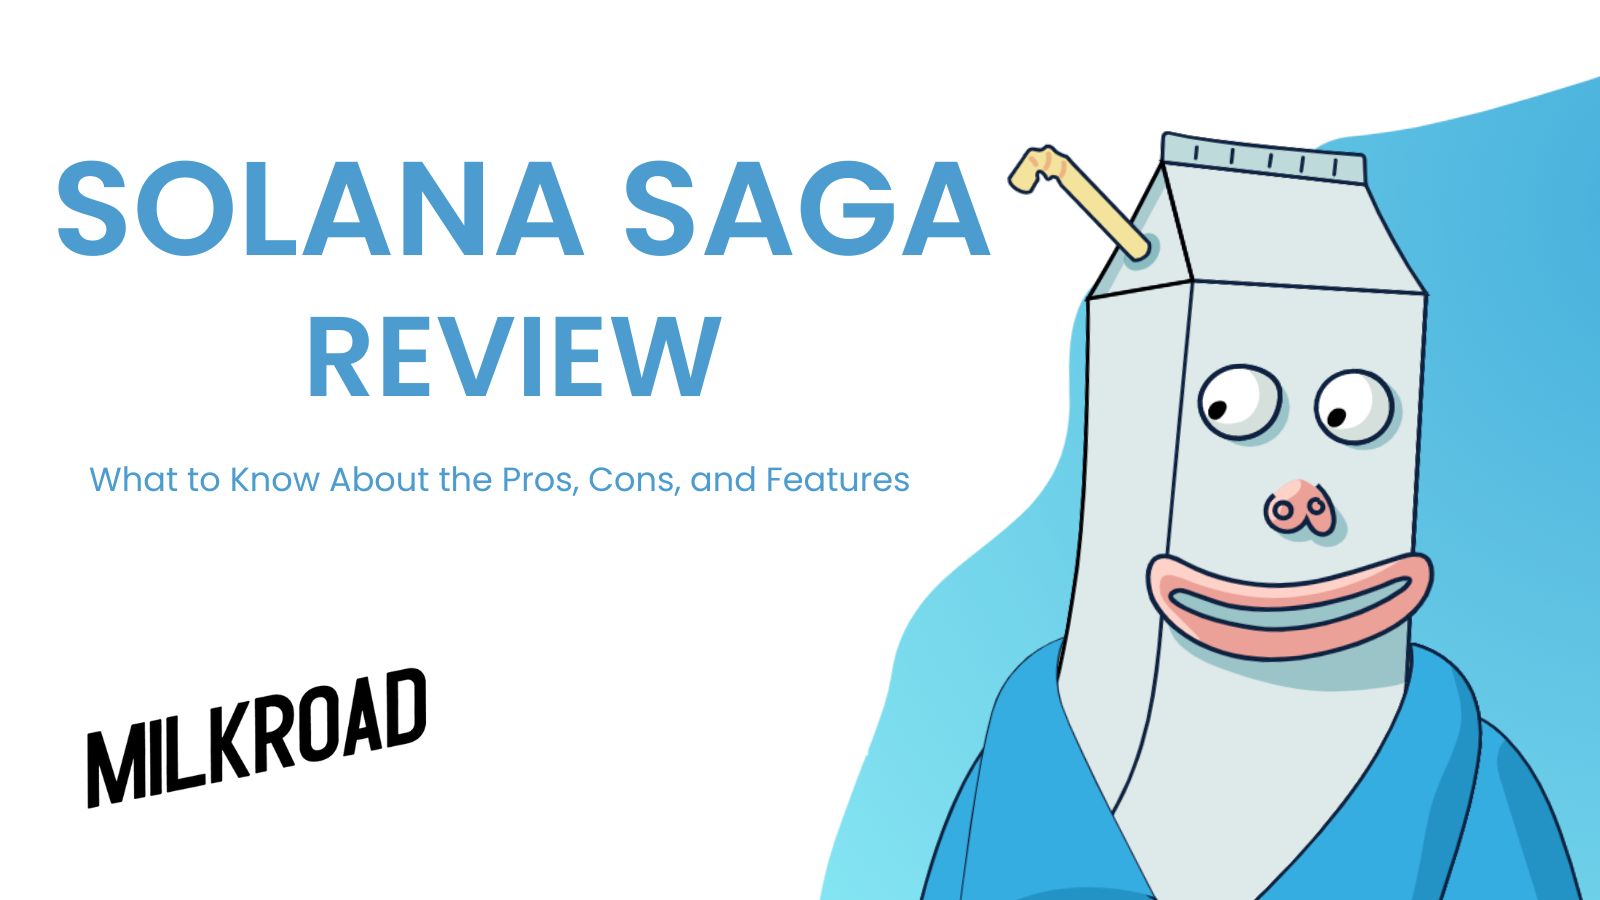 Solana Saga Review